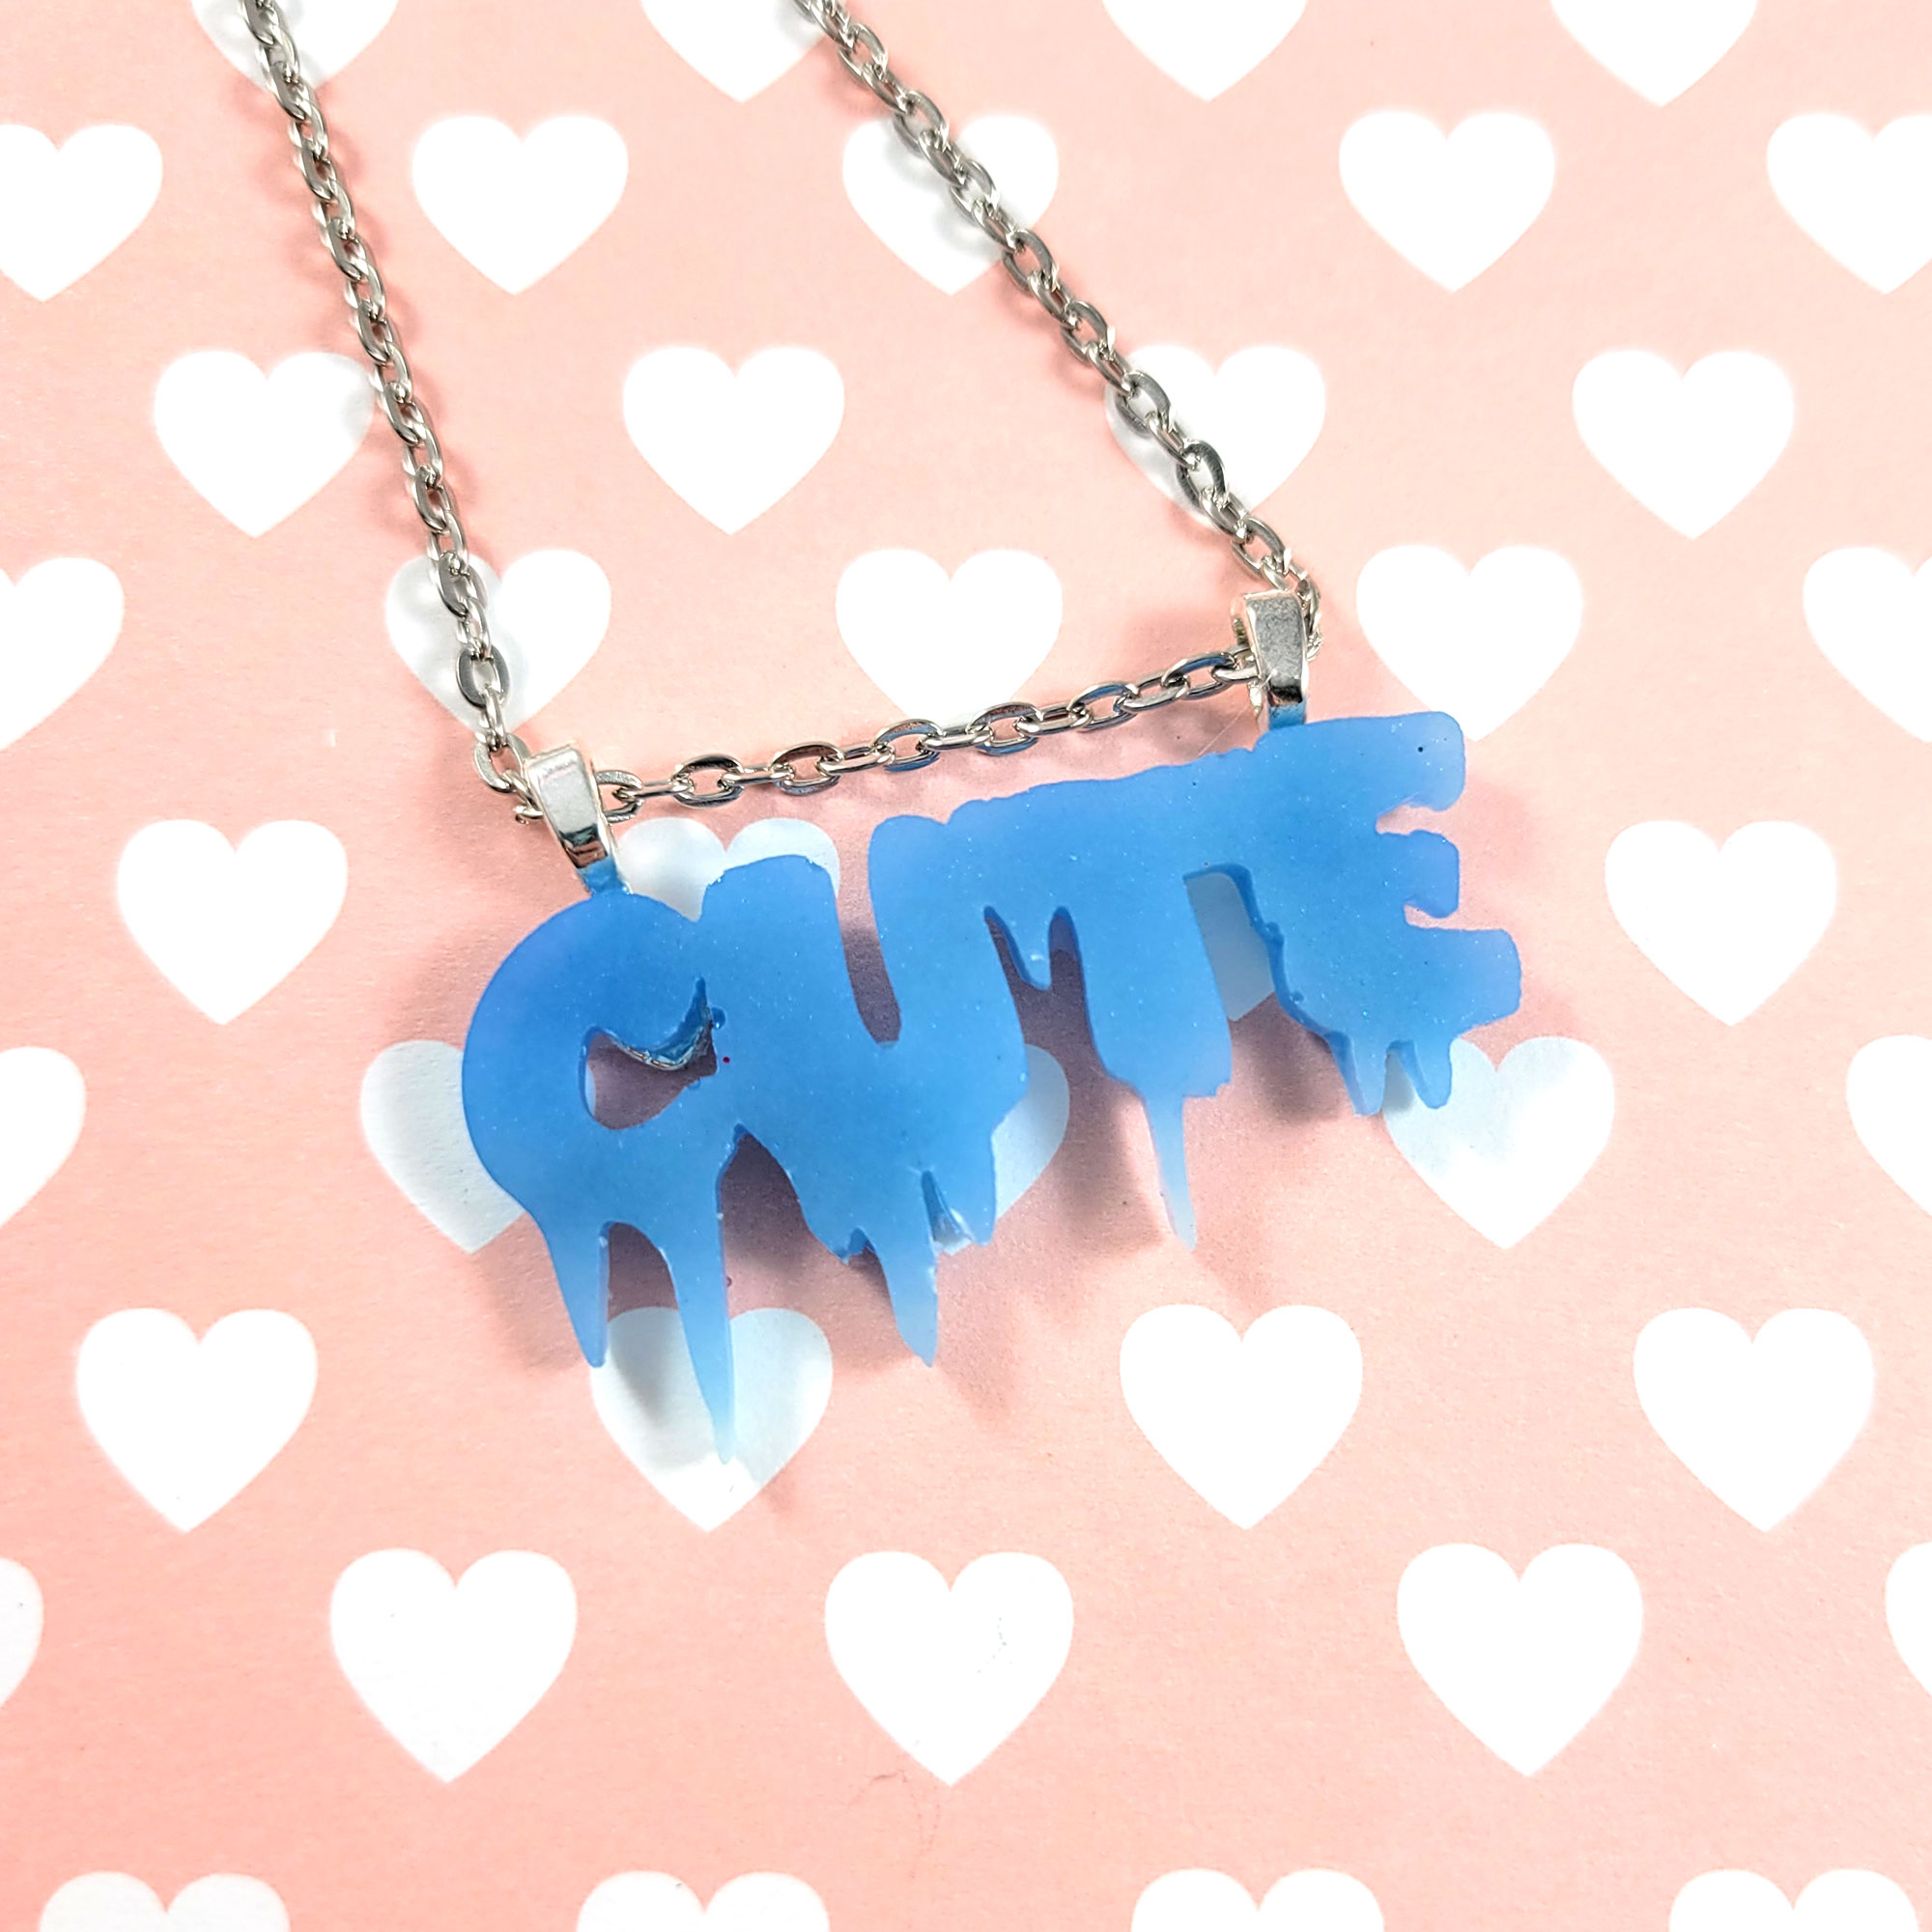 Spooky Cute Necklace by Wilde Designs